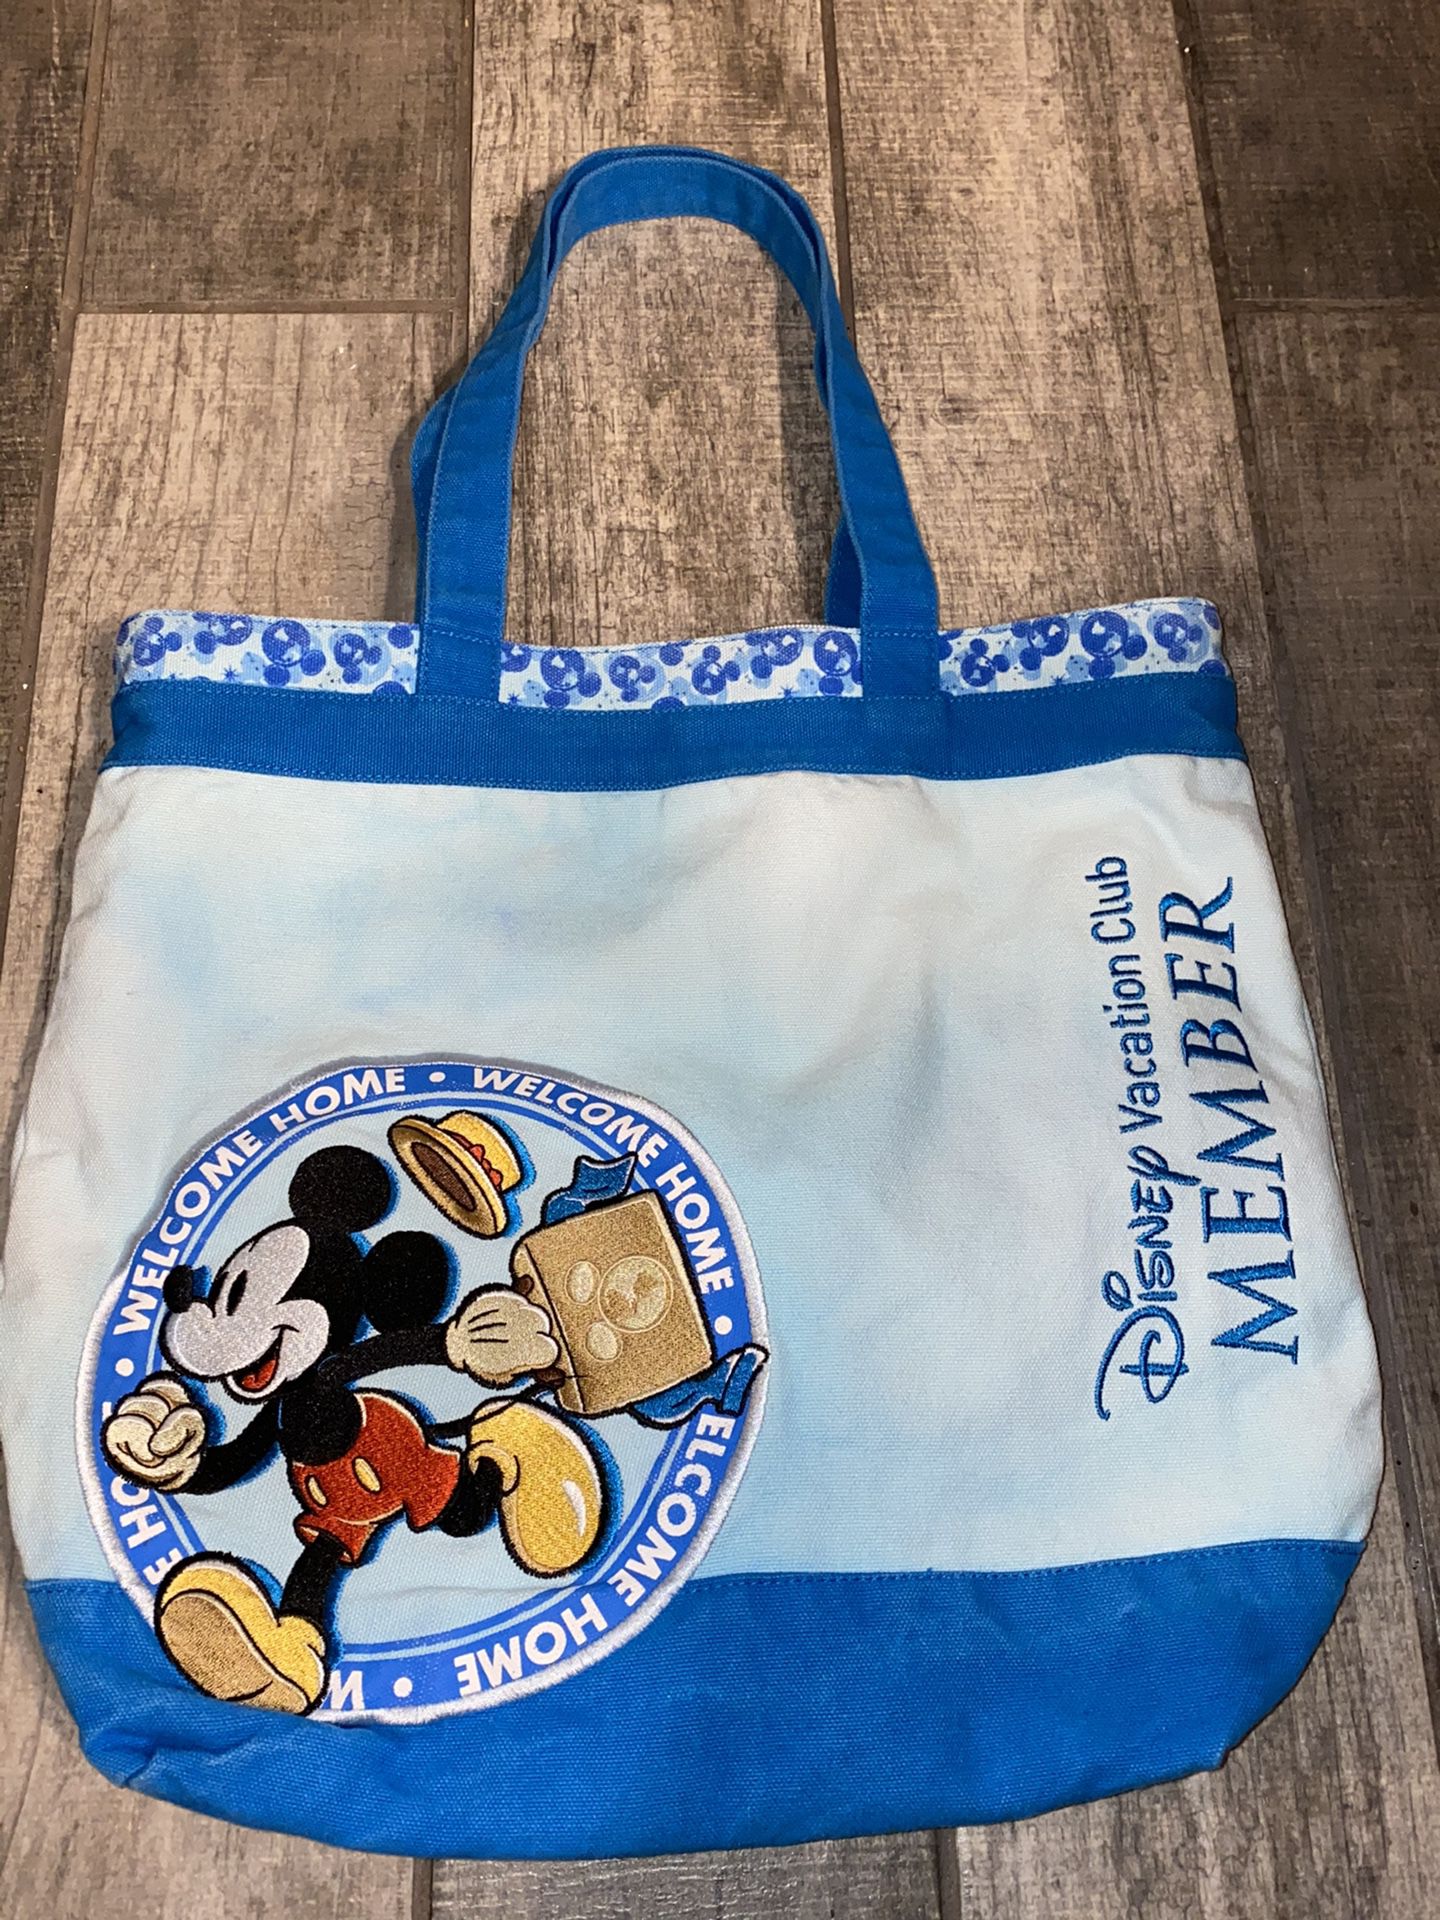 Disney Vacation Club Mickey Mouse canvas bag $40